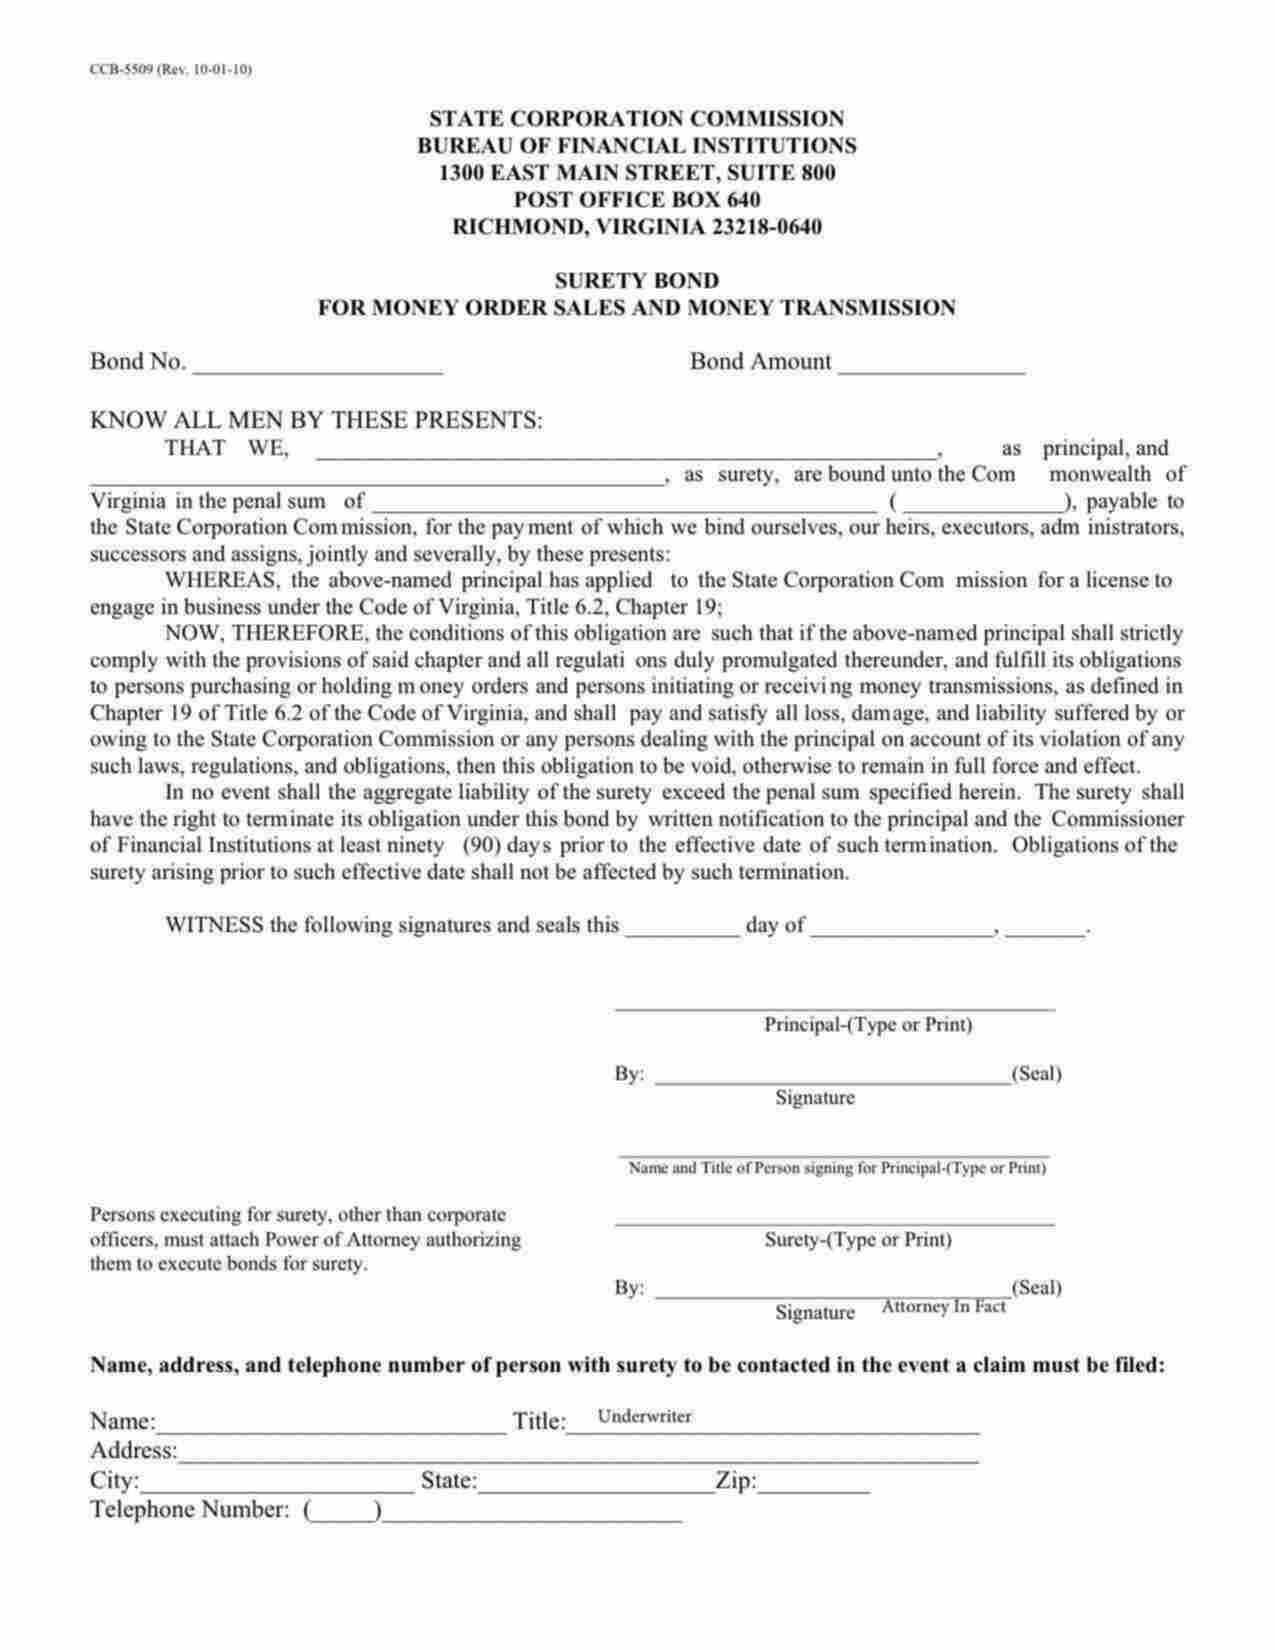 Virginia Money Order Seller and Money Transmitter License Bond Form